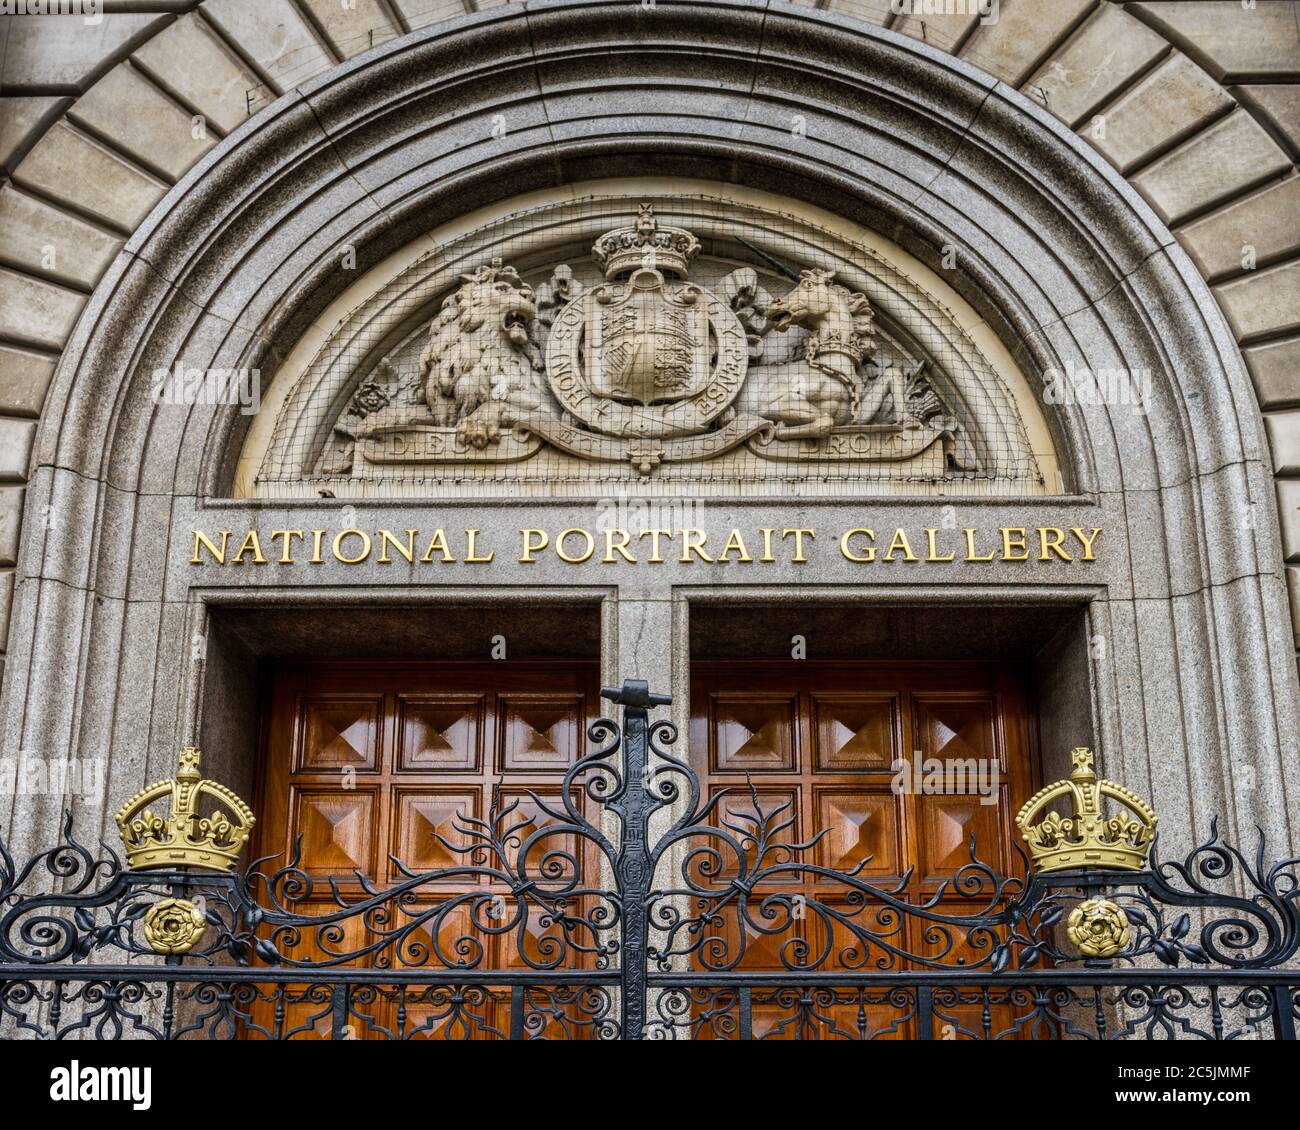 Eingang Der National Portrait Gallery London. Eingangstüren zur National Portrait Gallery, St Martin's Place, London. Architekt Ewan Christian 1896. Stockfoto